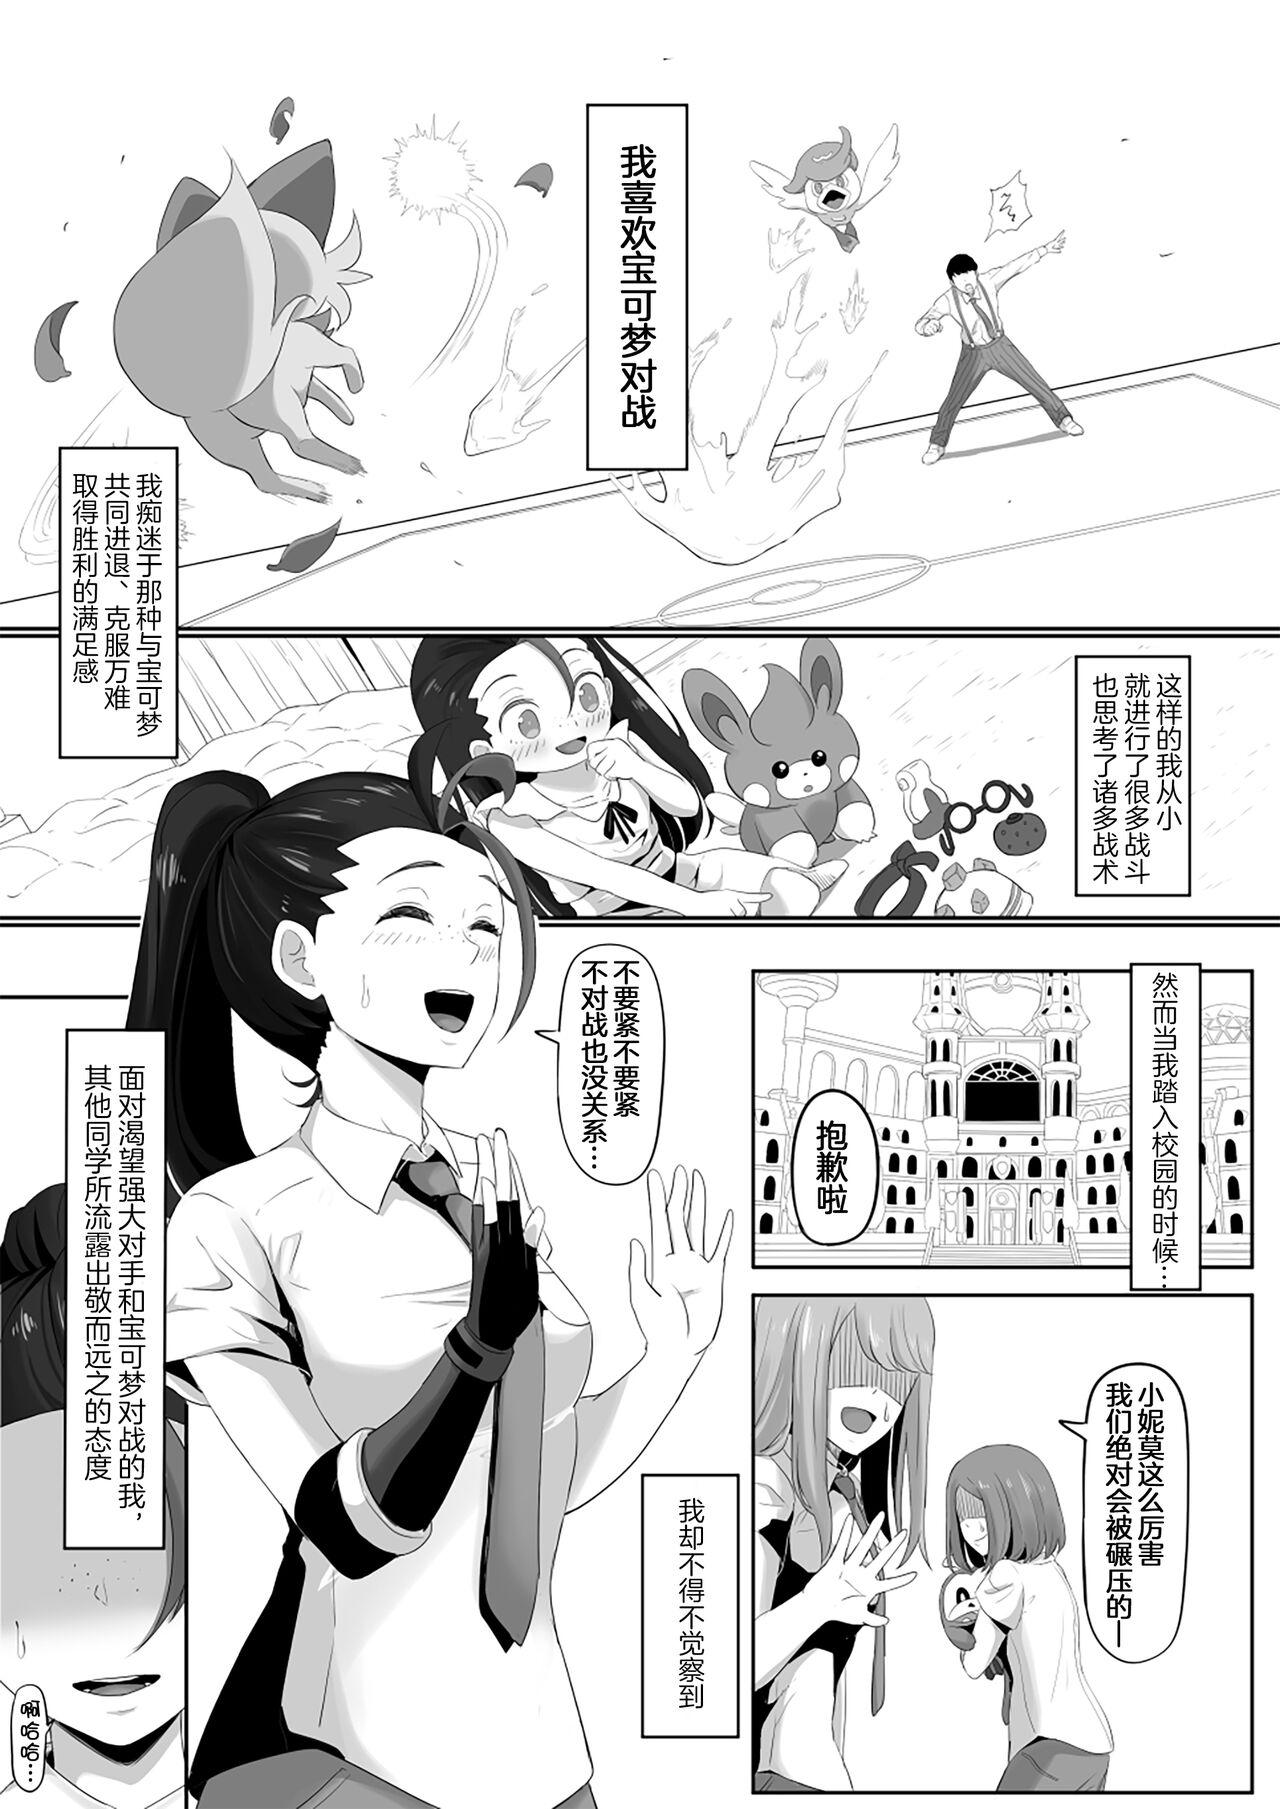 Chunky Nemona's Ero Manga | 成为我独一无二的劲敌可以吗 - Pokemon | pocket monsters Cuzinho - Page 2